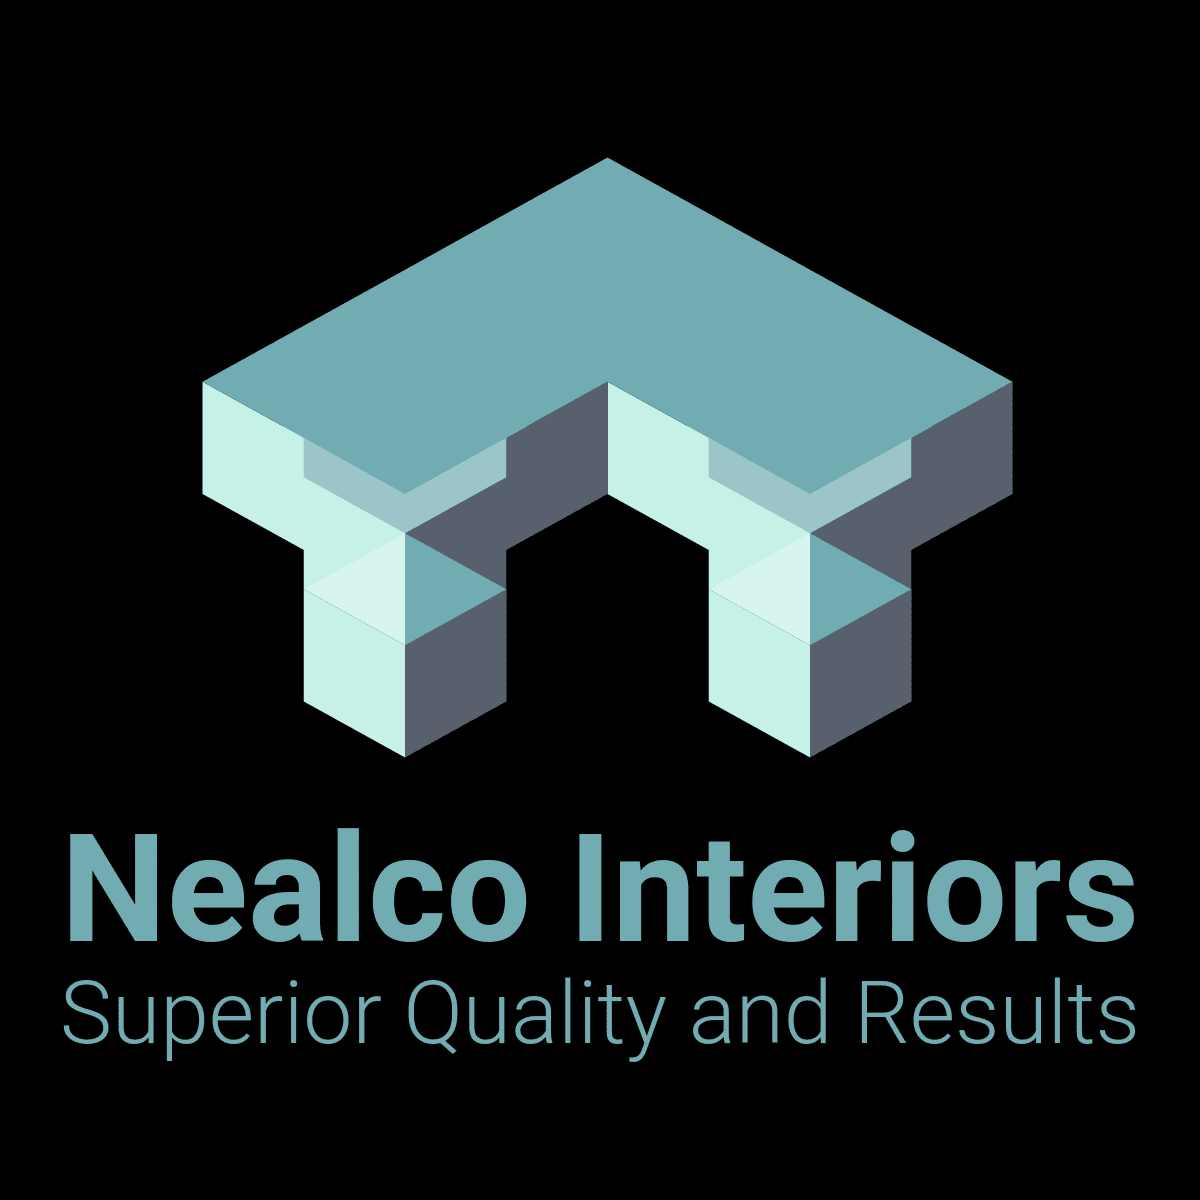 Nealco Interiors